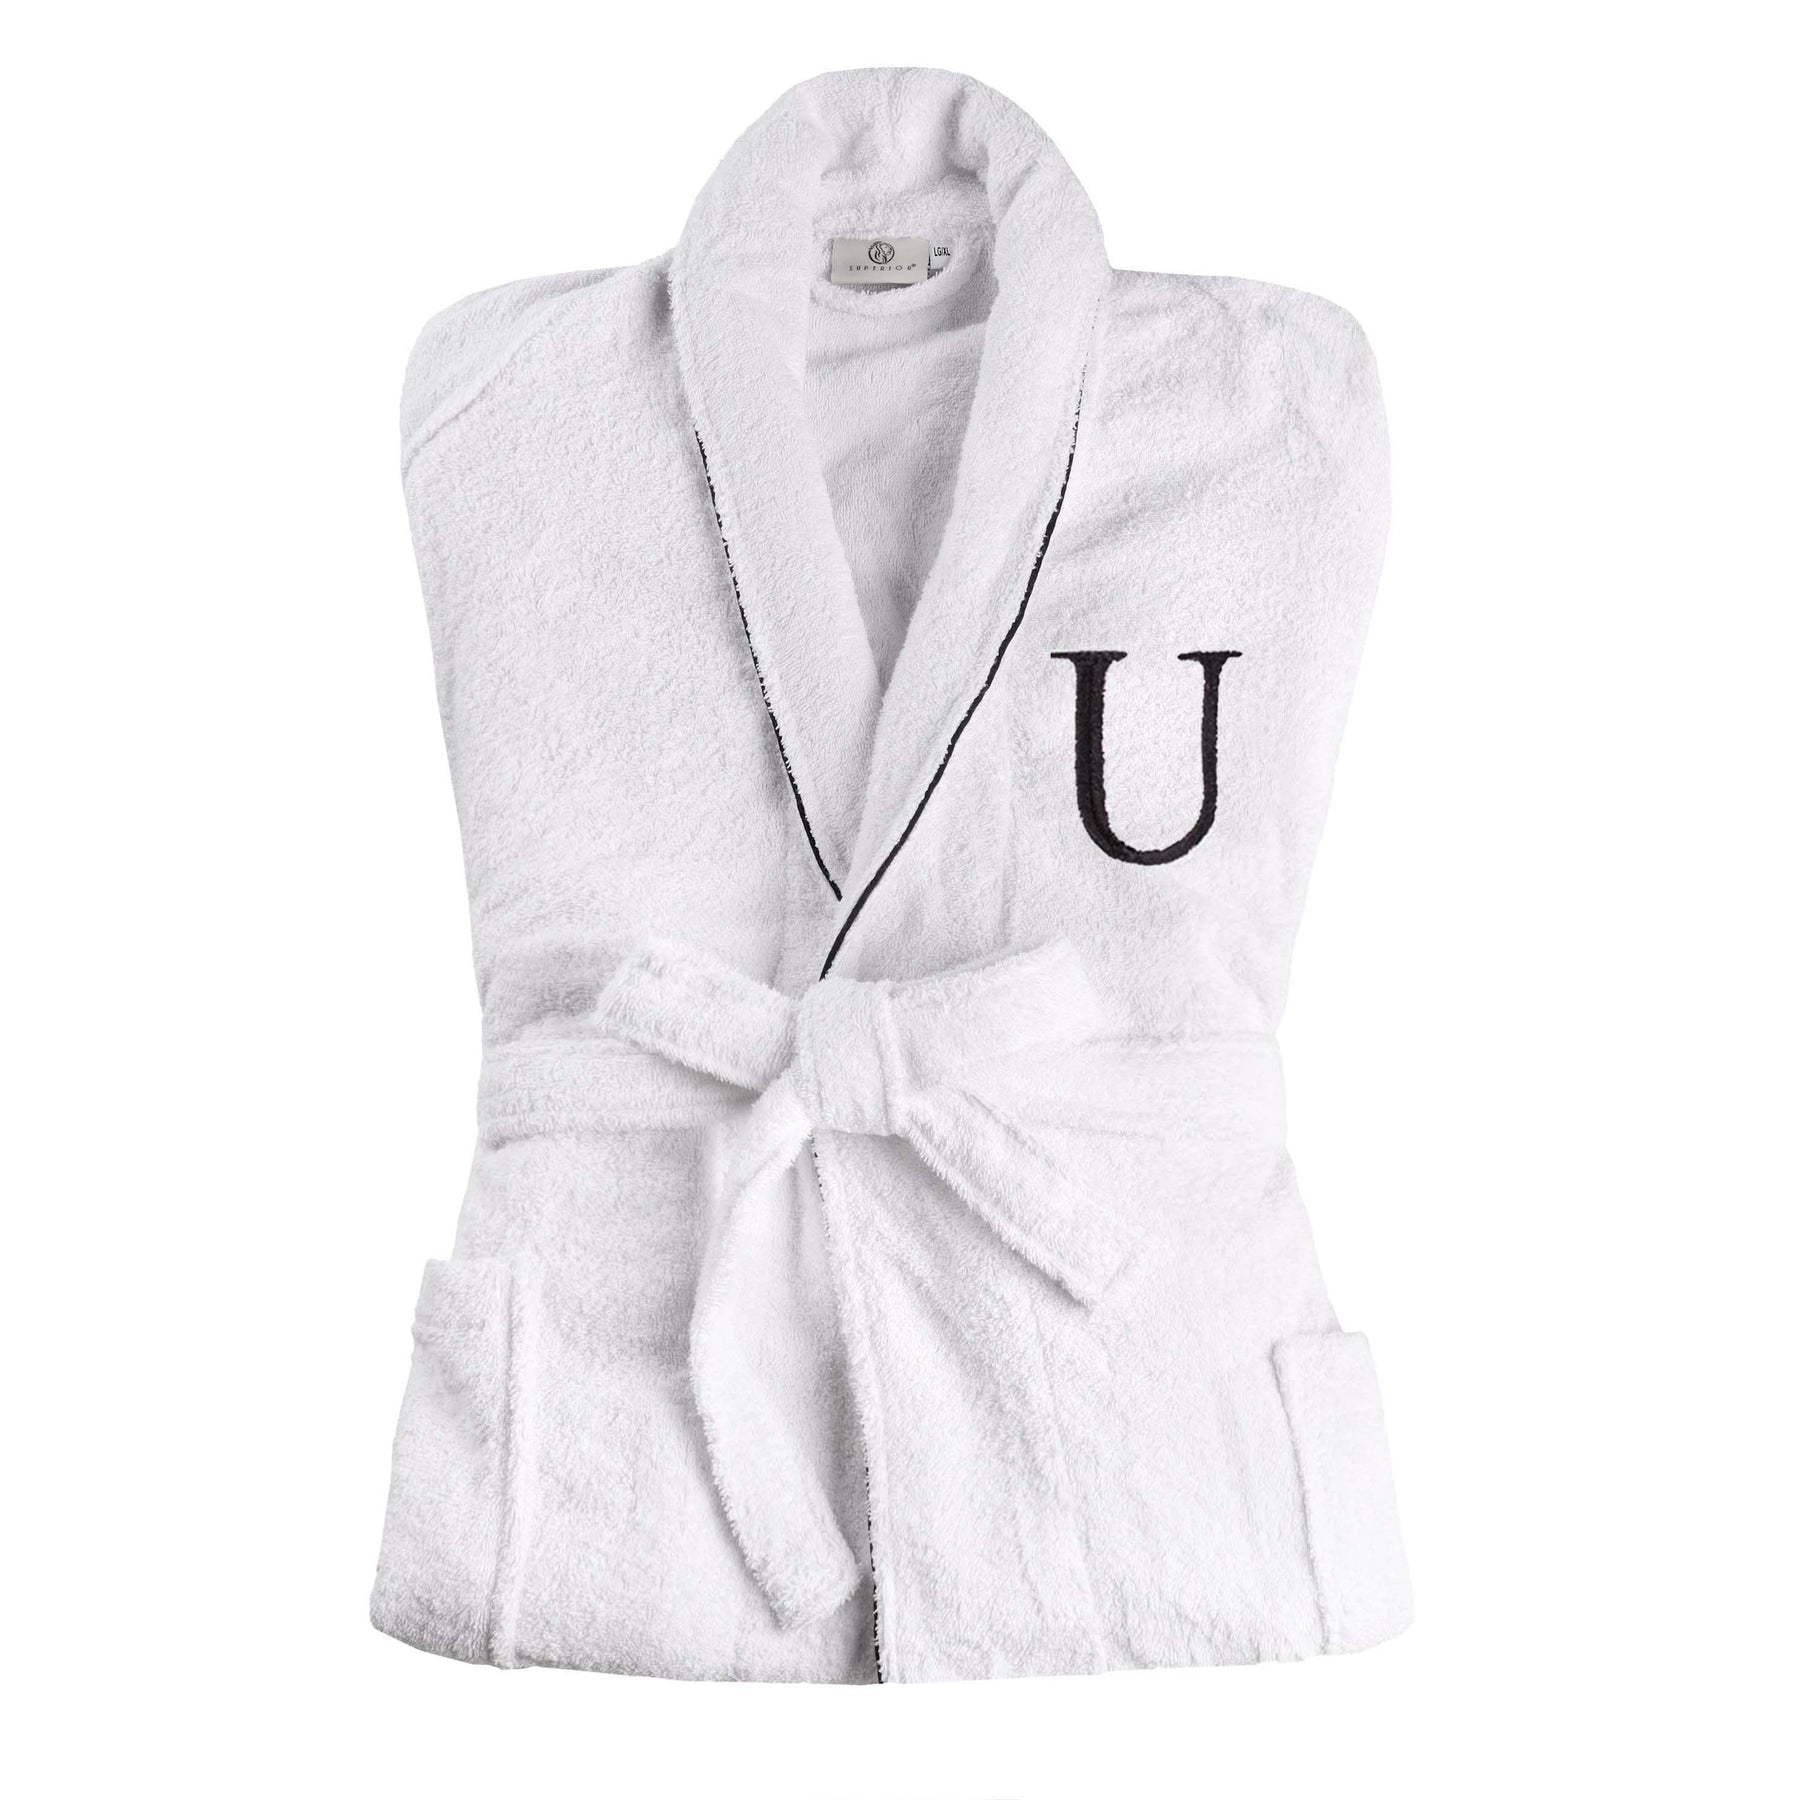 Cotton Adult Unisex Embroidered Fluffy Bathrobe White - Letter U